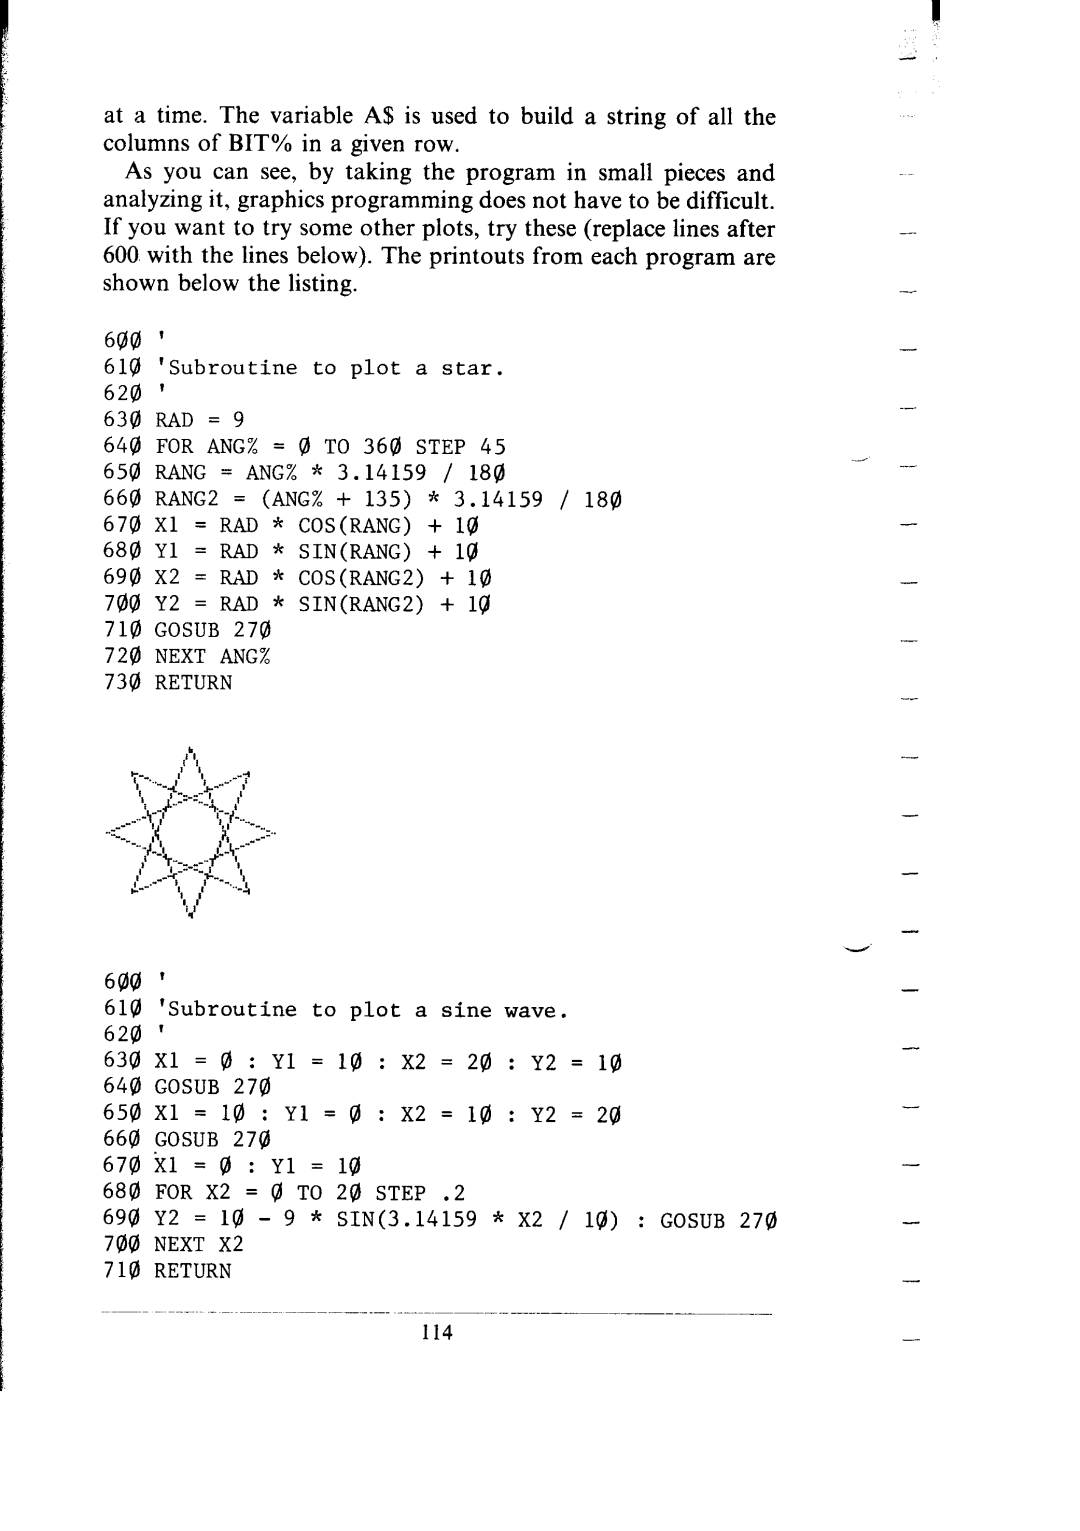 Star Micronics SR-10/I5 user manual Subroutine to plot a star 620 630 RAD = 